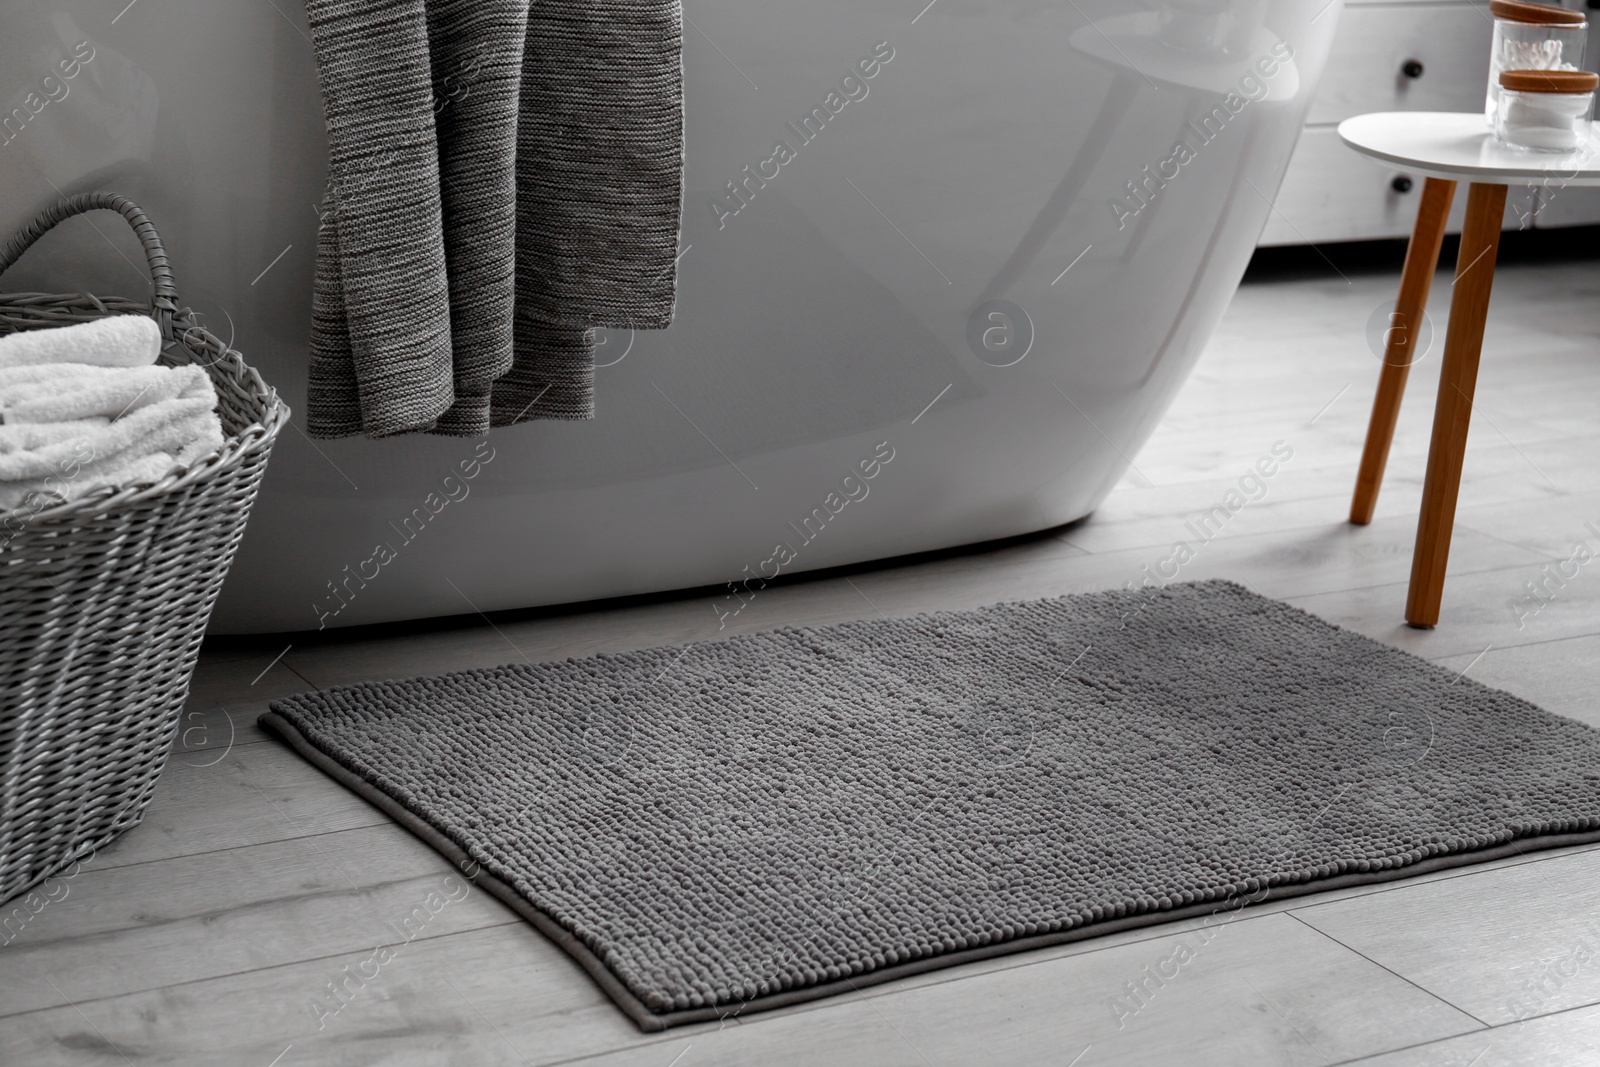 Photo of Soft grey mat on floor near tub in bathroom. Interior design